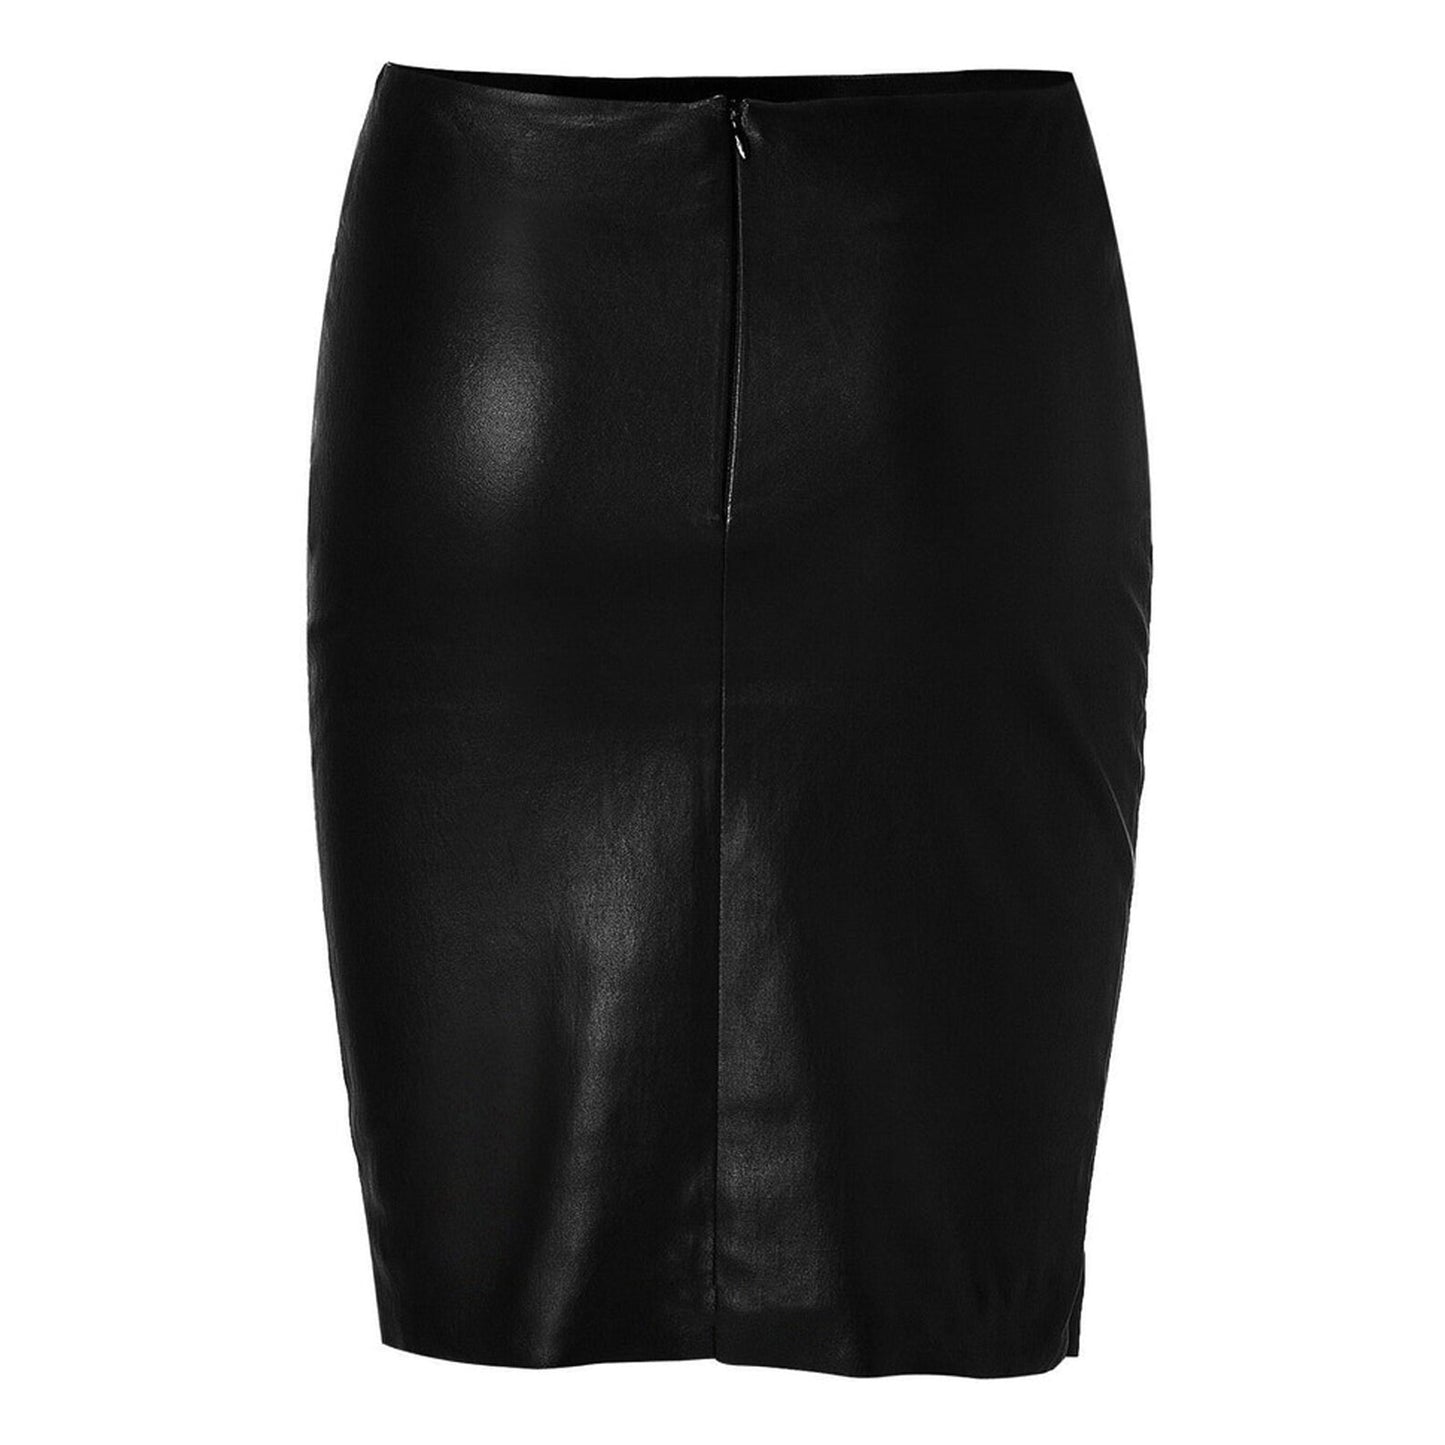 Original Sheep Leather Women Knee Length Skirt